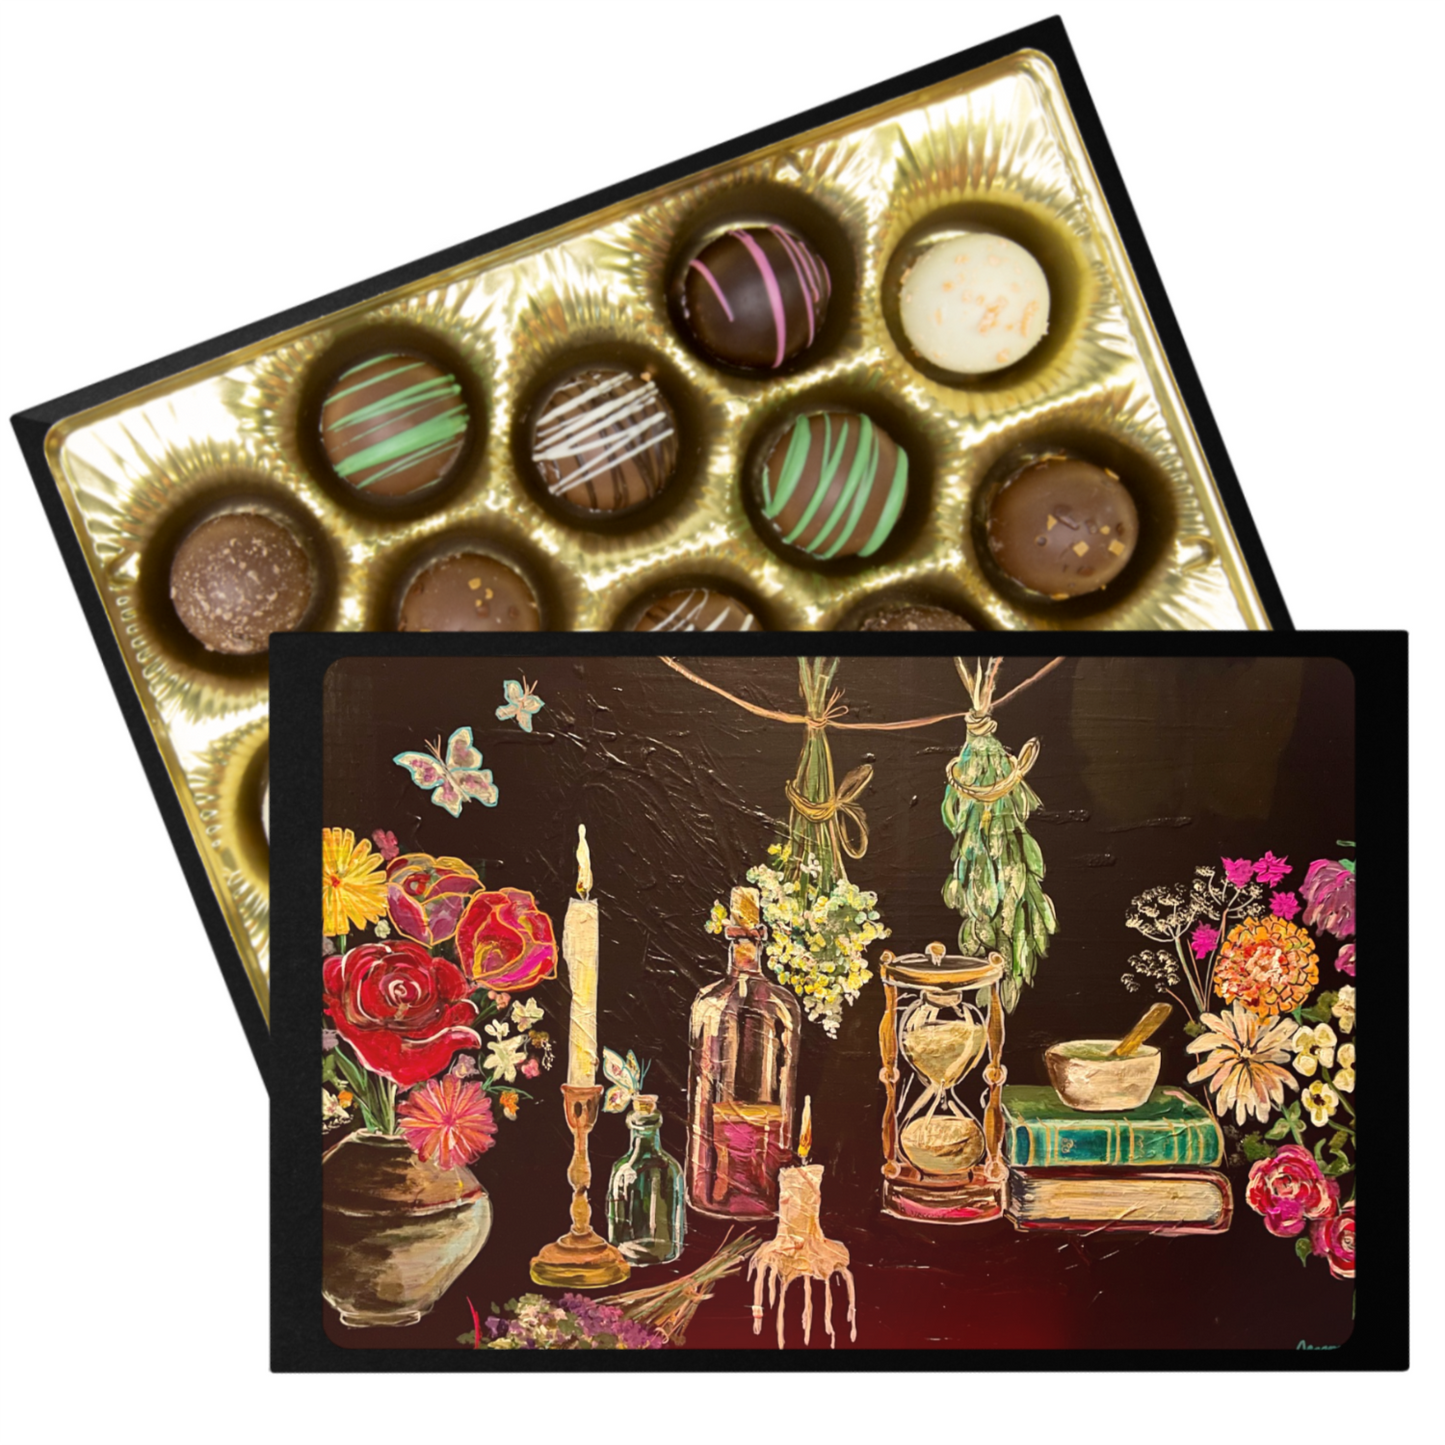 Handmade Chocolate Truffles with "Sarah's Apothecary" Box